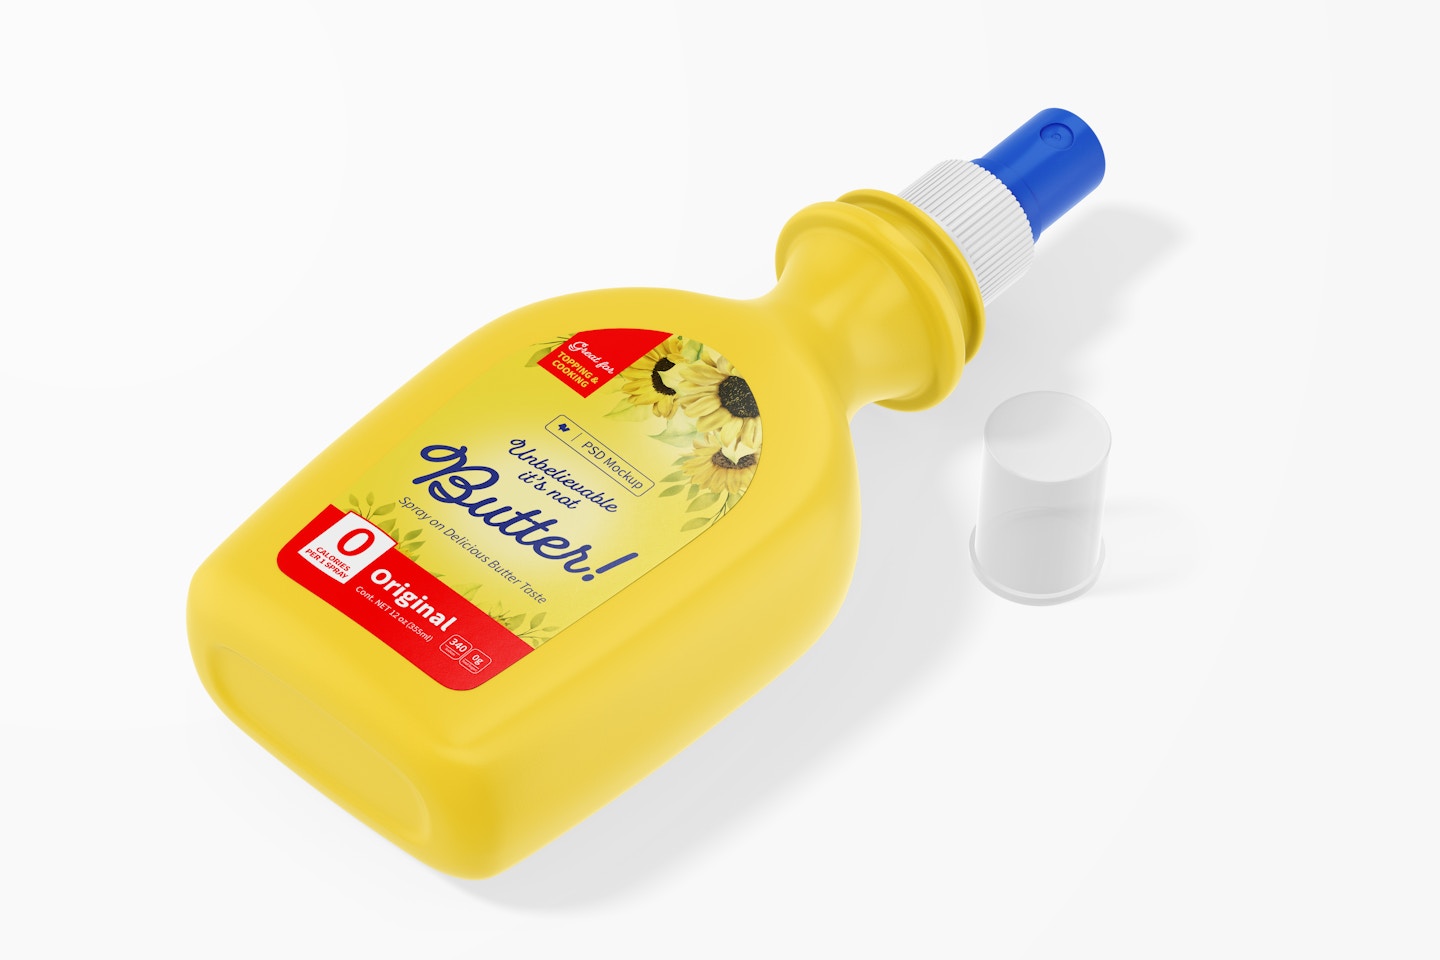 12 oz Vegetable Oil Spray Bottle Mockup, Dropped